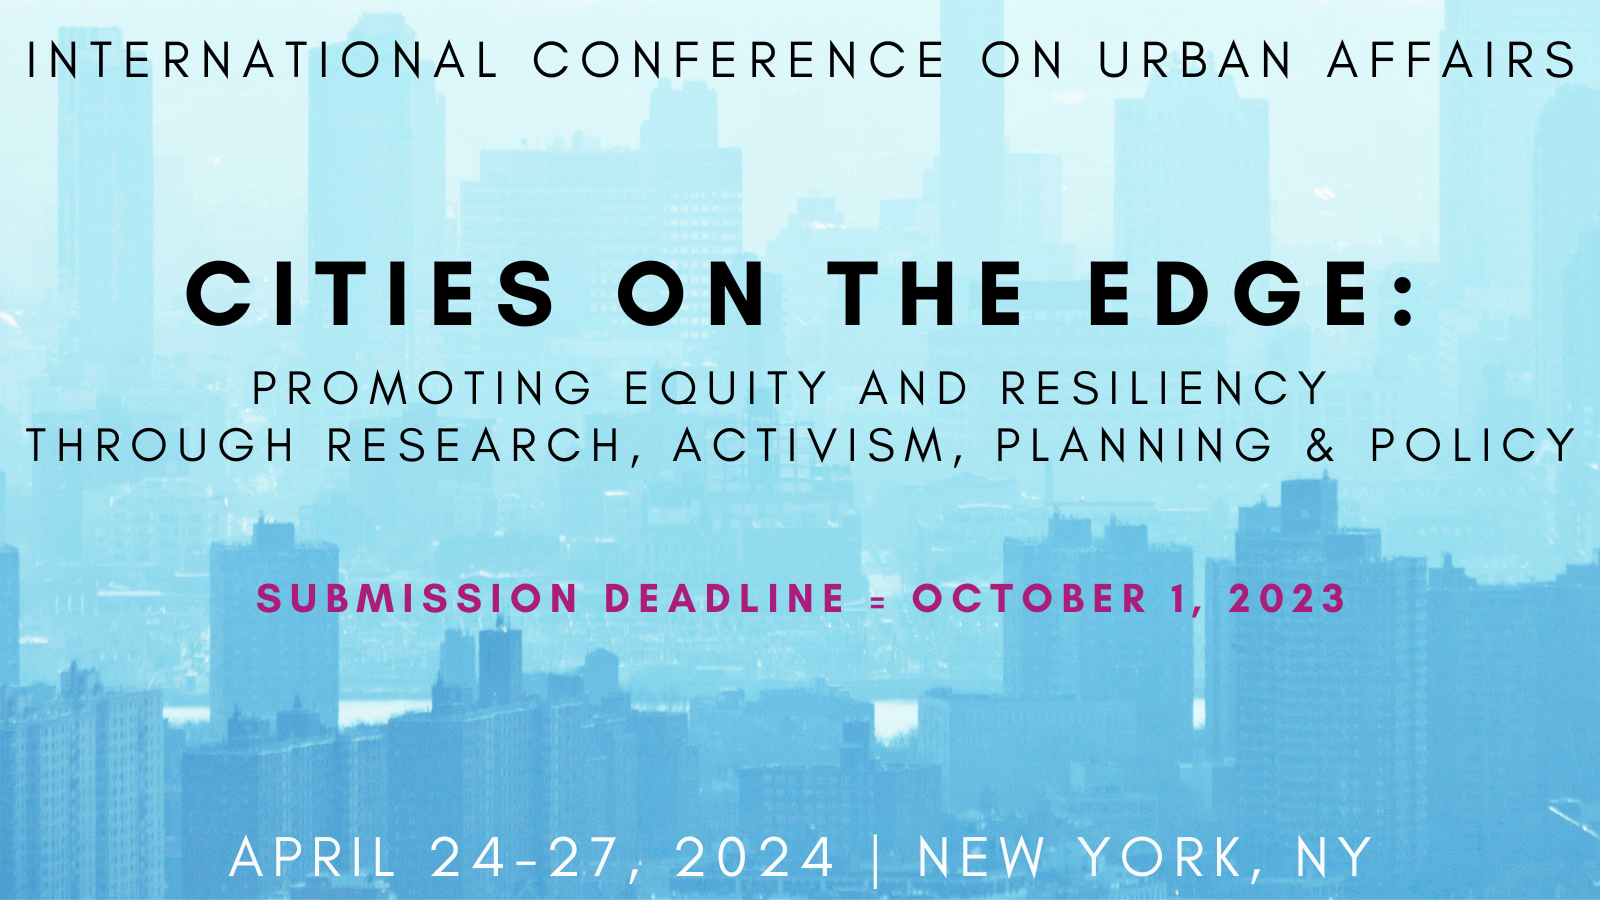 OCA alla International Conference on Urban Affairs “Cities on the edge” (24-27 aprile 2024, New York)